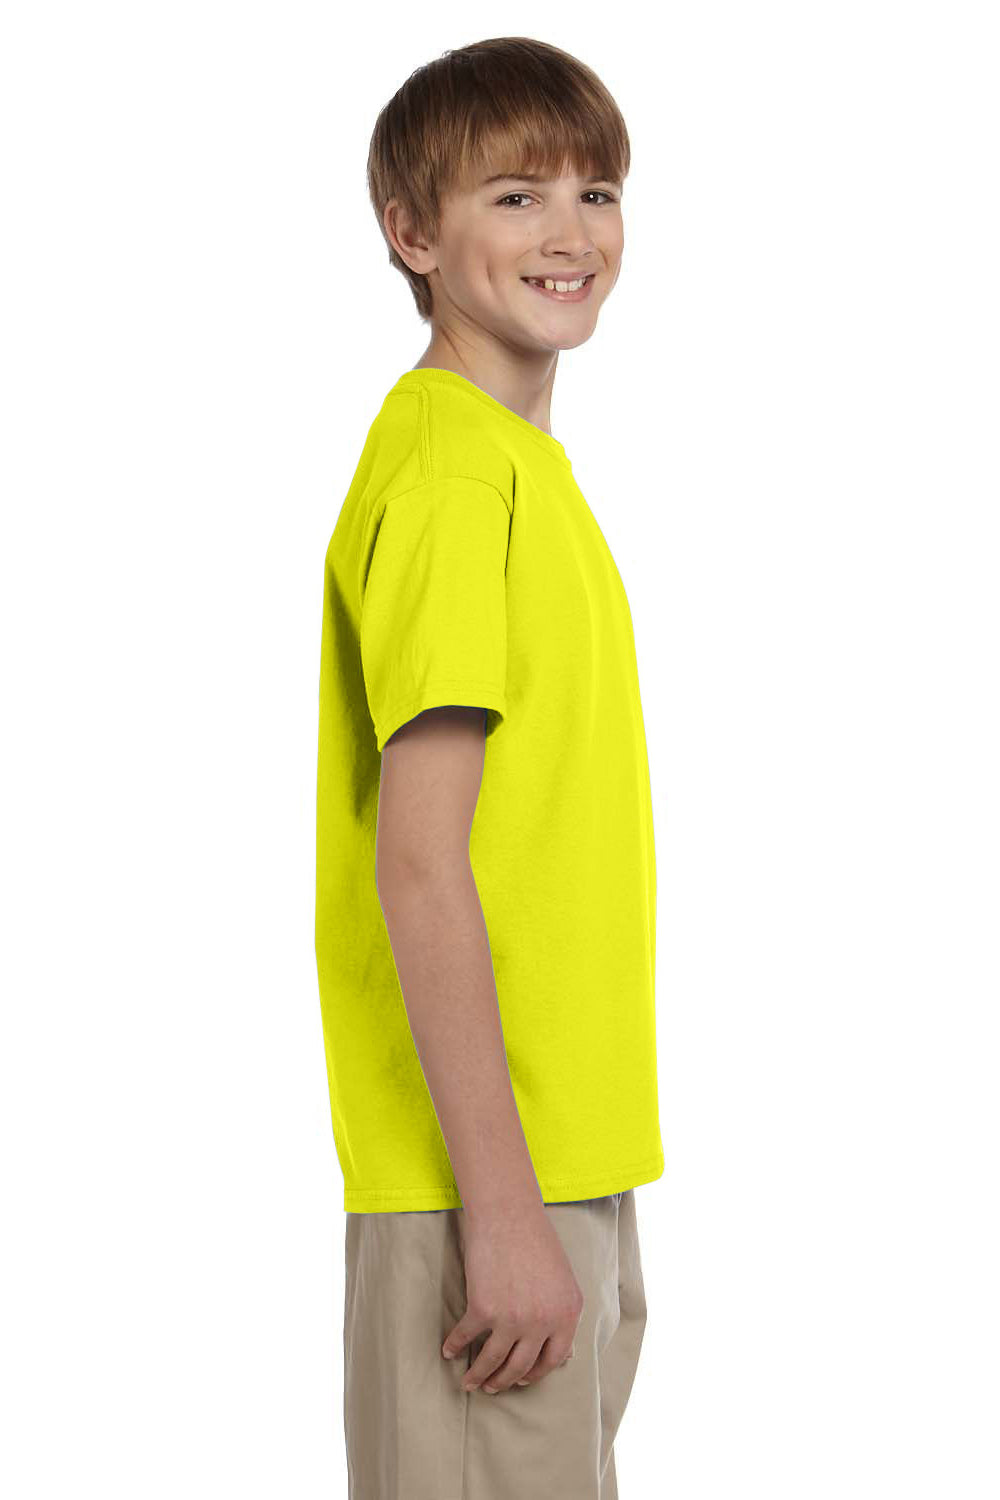 Hanes 5370 Youth EcoSmart Short Sleeve Crewneck T-Shirt Safety Green SIde